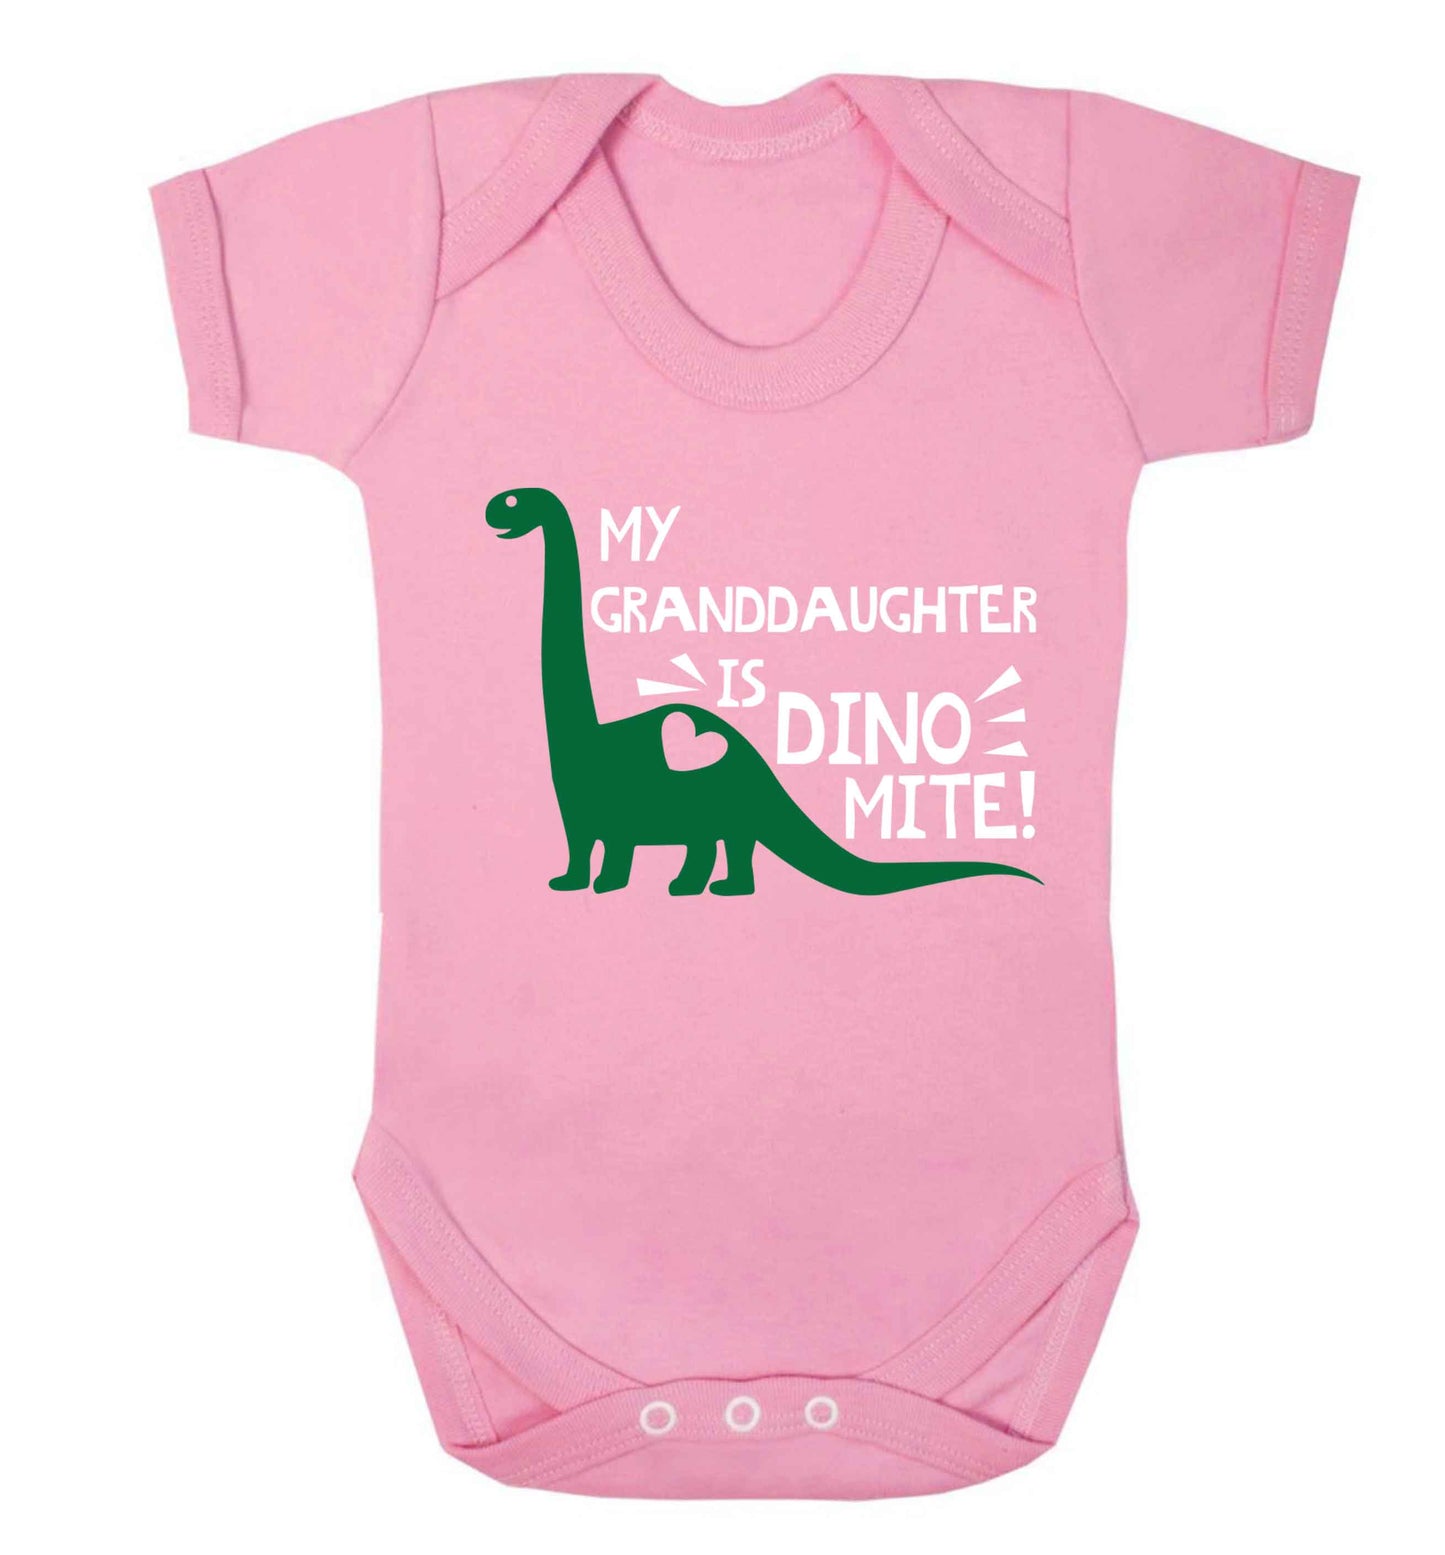 My granddaughter is dinomite! Baby Vest pale pink 18-24 months